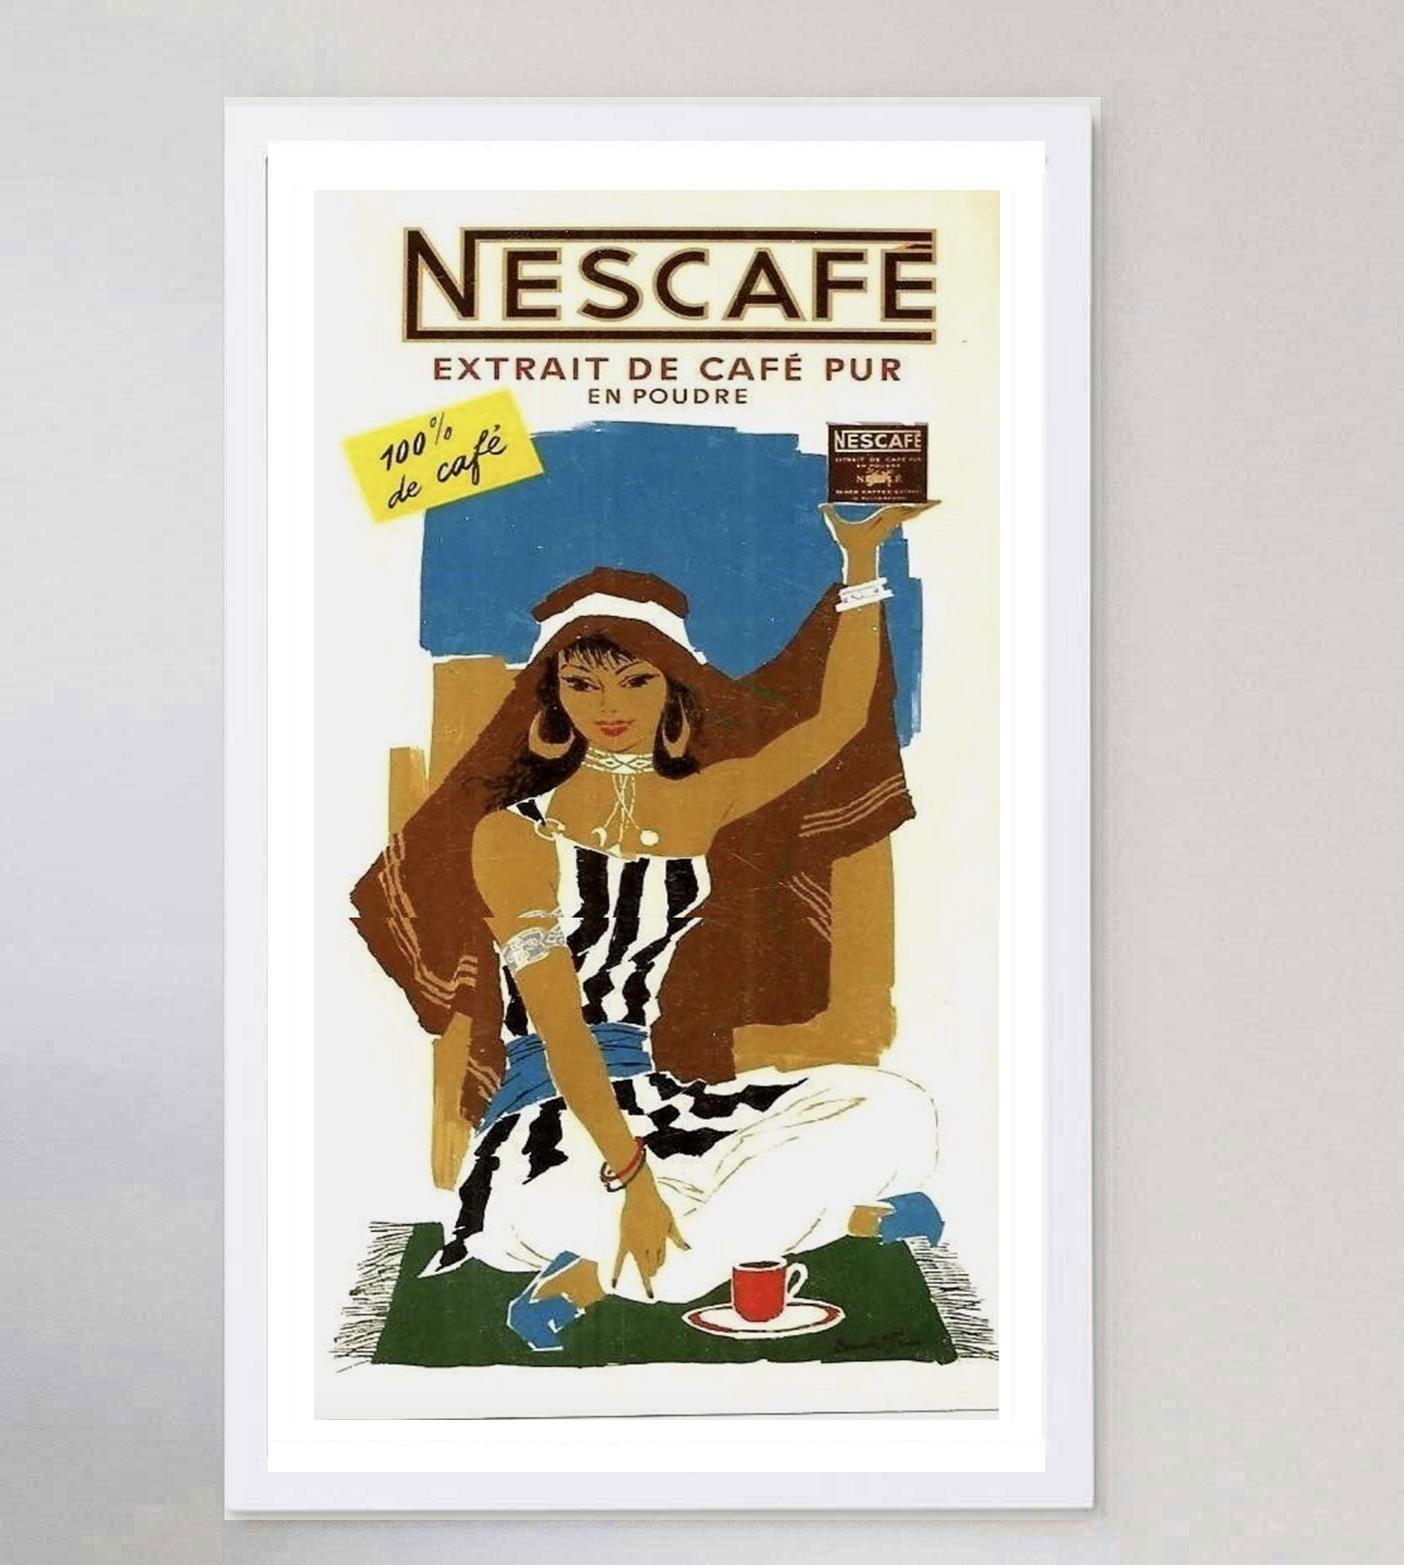 Suisse Nescafe - Pure Coffee Extract - Affiche originale vintage de 1960 en vente